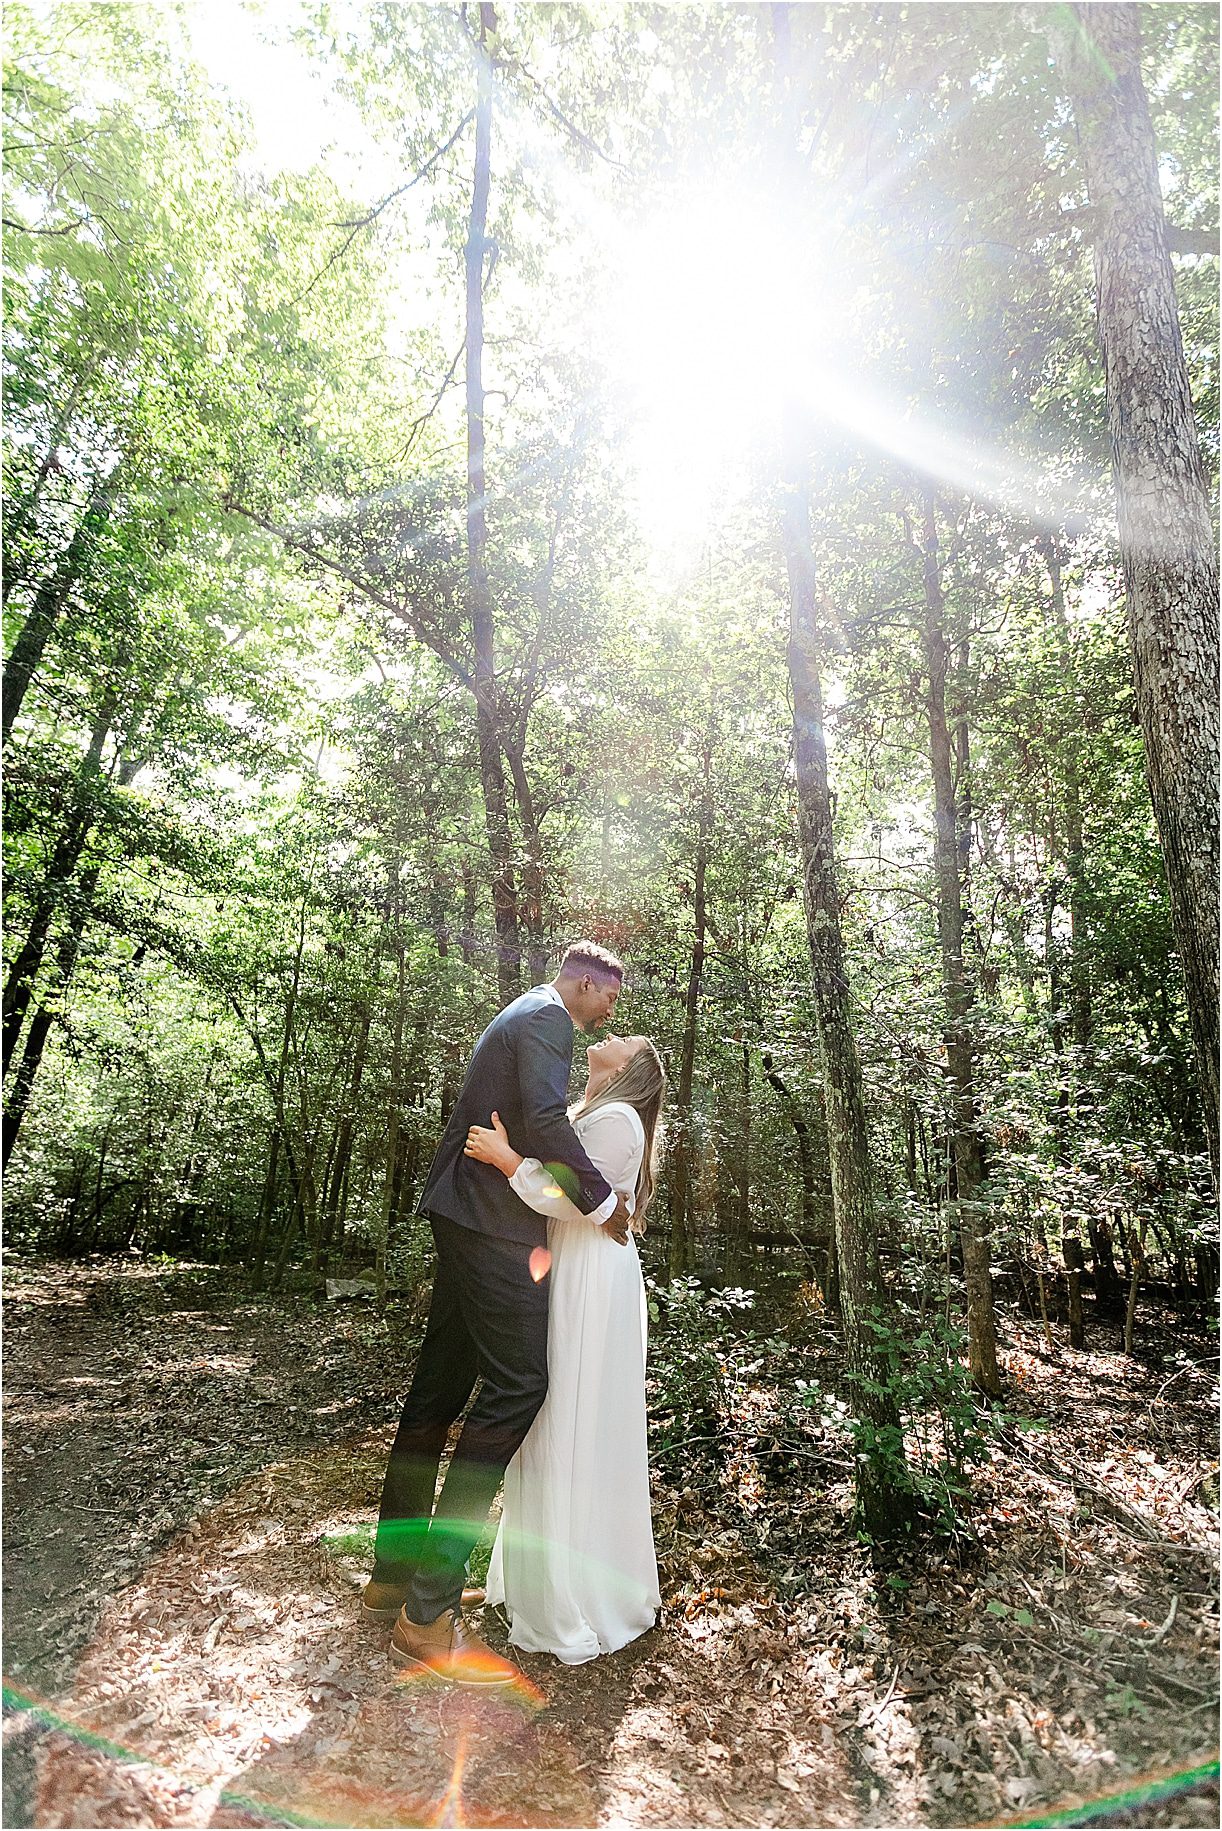 Wedding in the Woods of Virginia | Woods Wedding Venue 